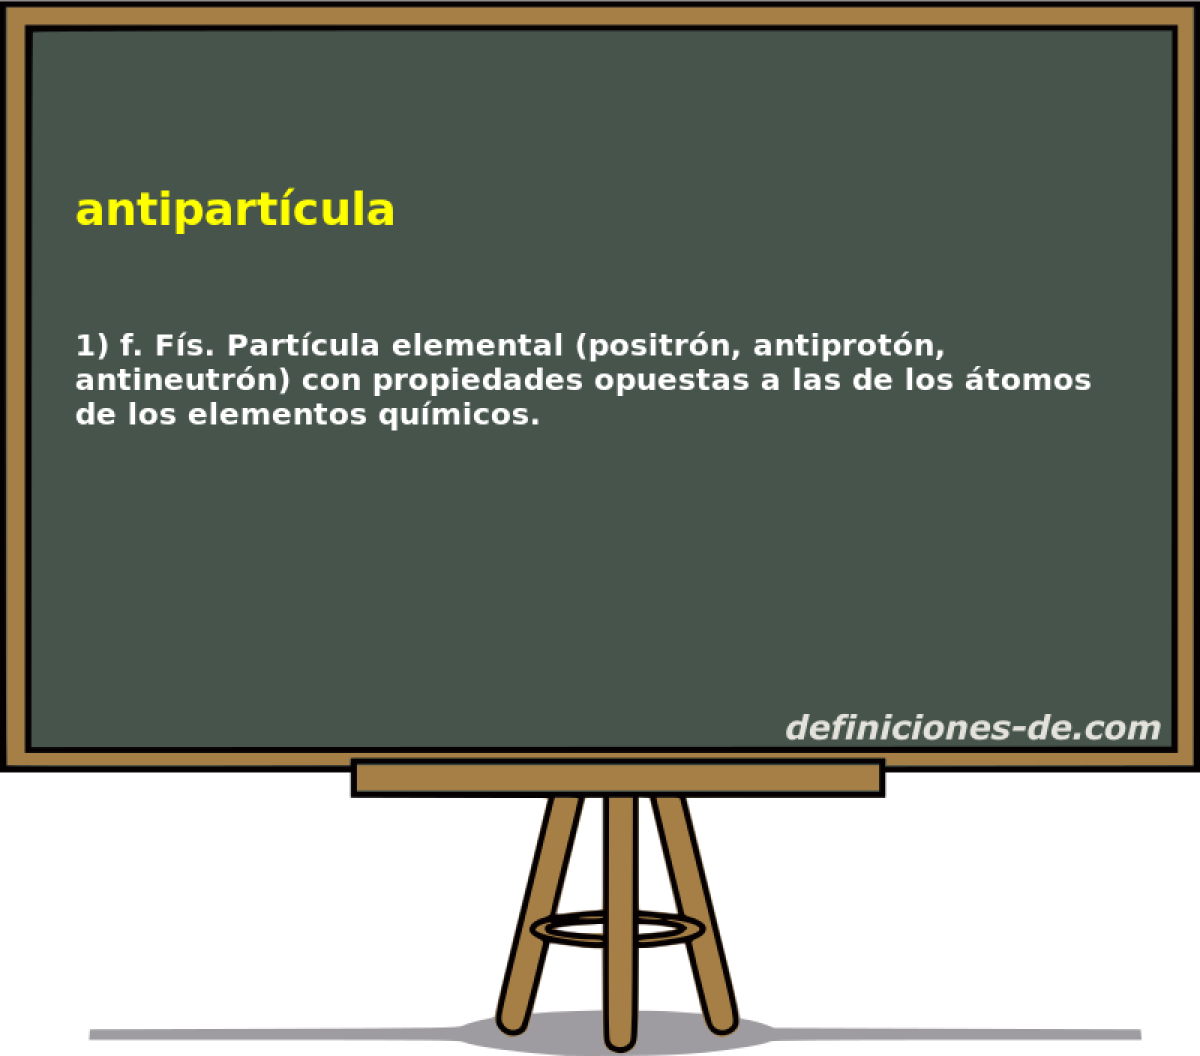 antipartcula 